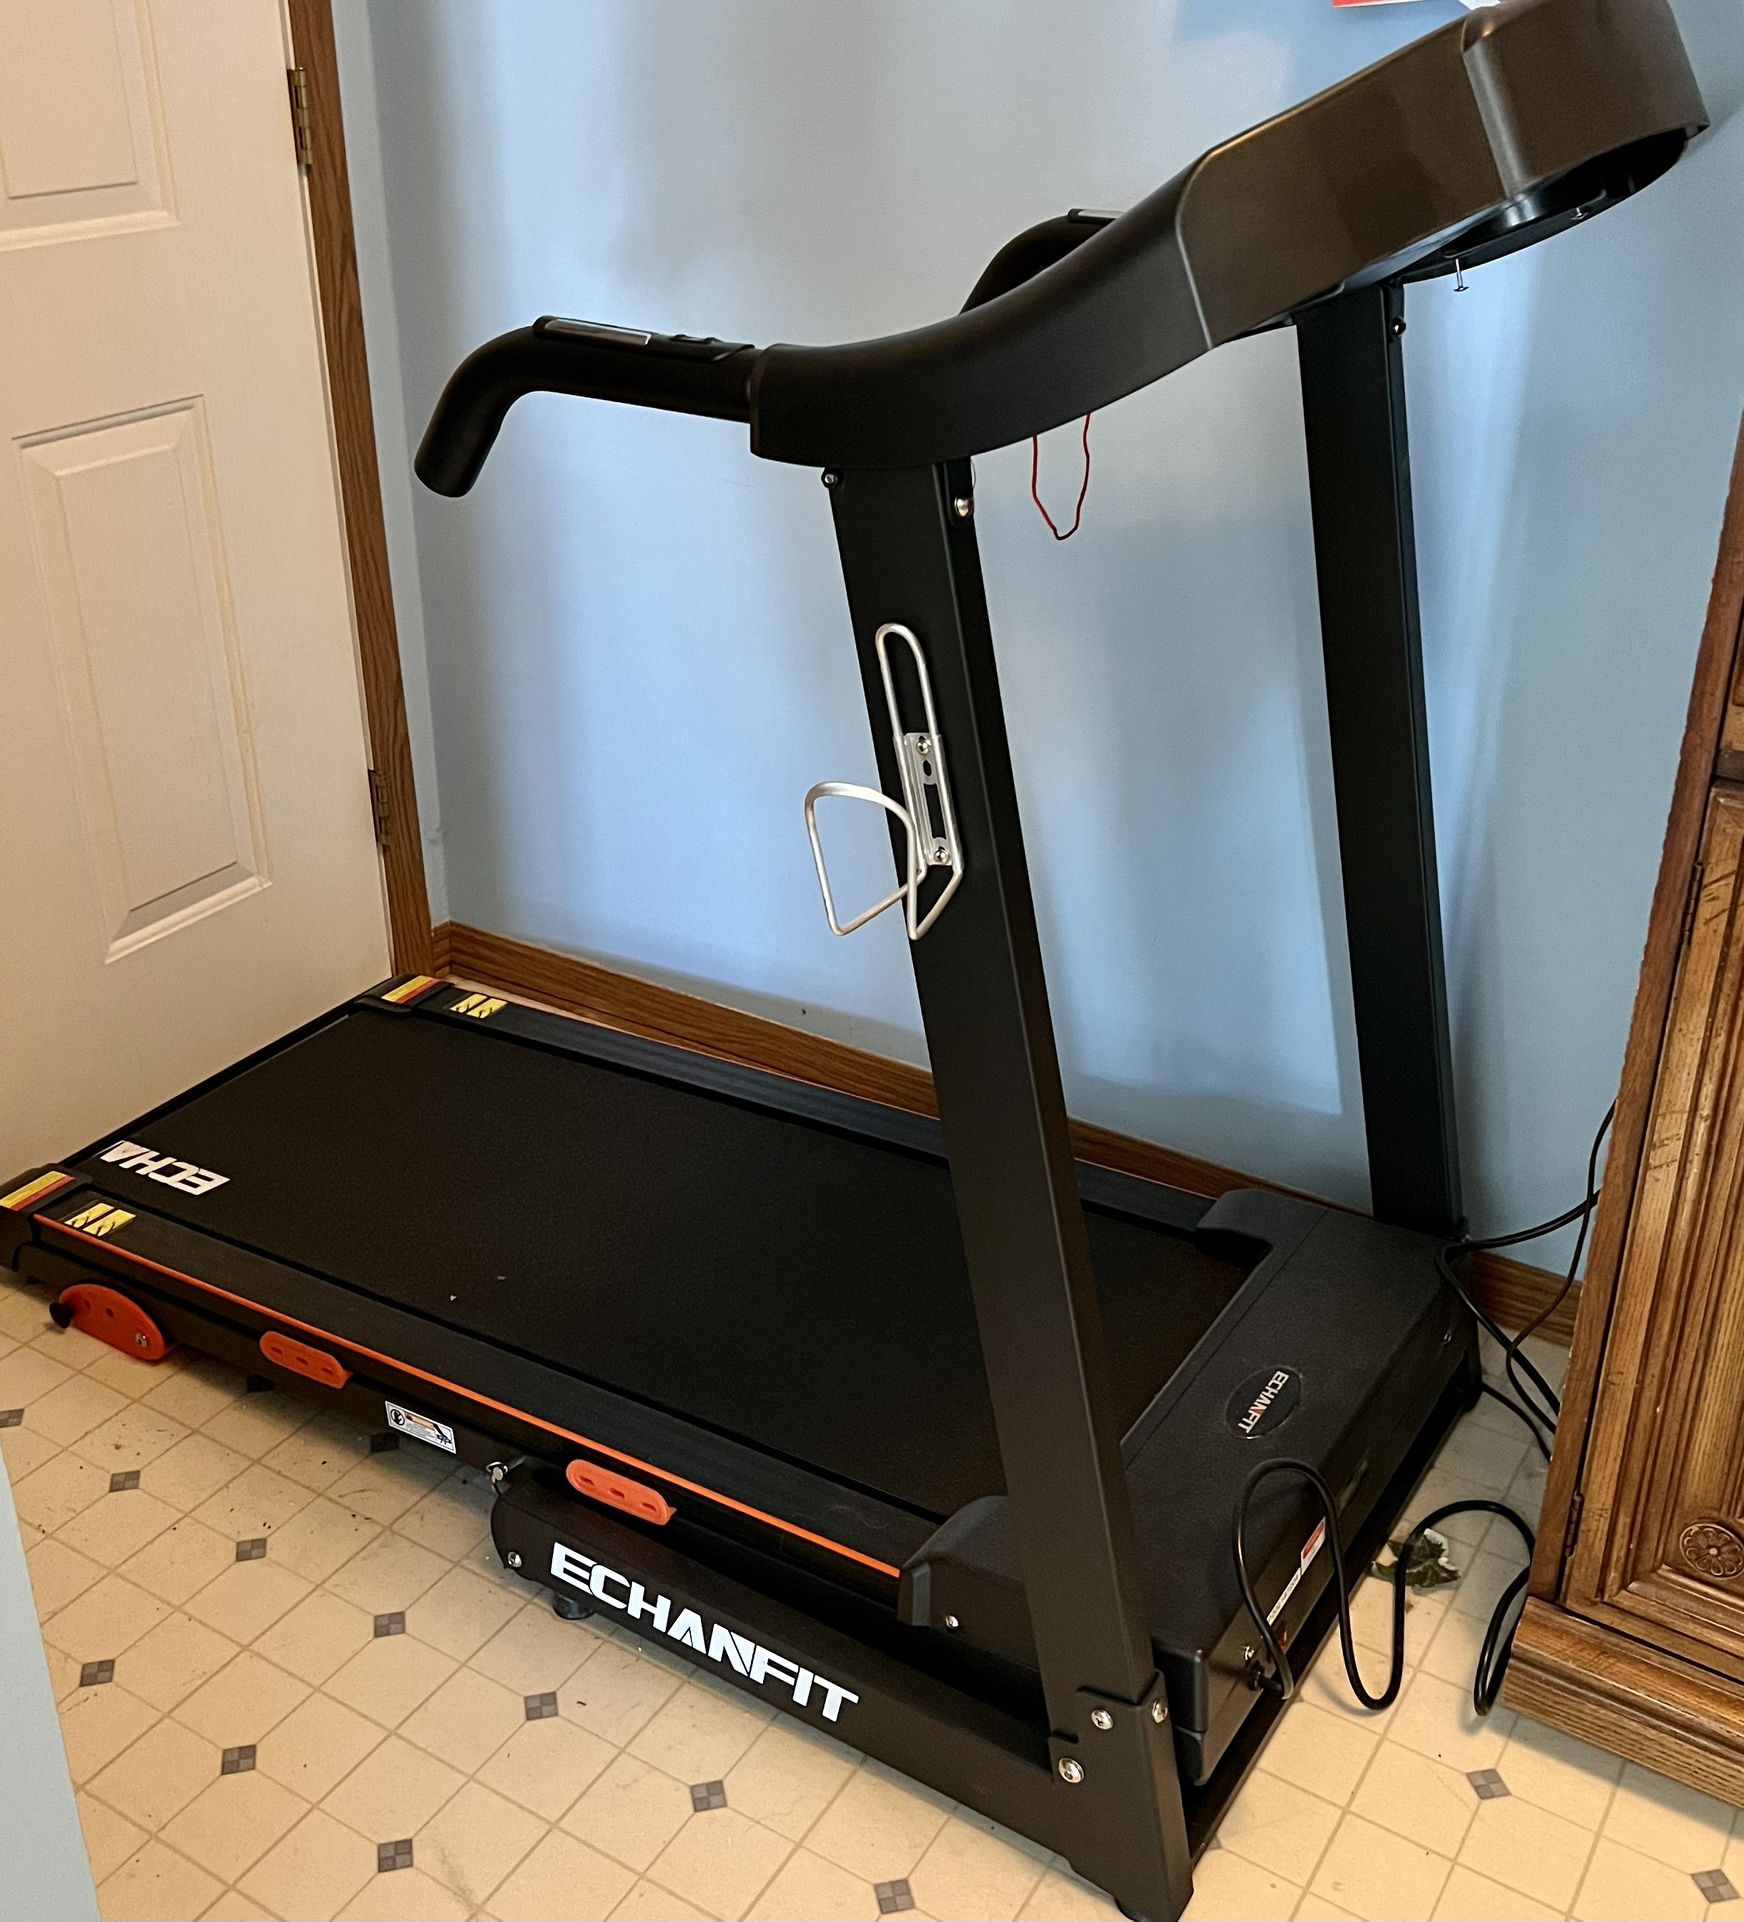 Echanfit Foldup Treadmill 